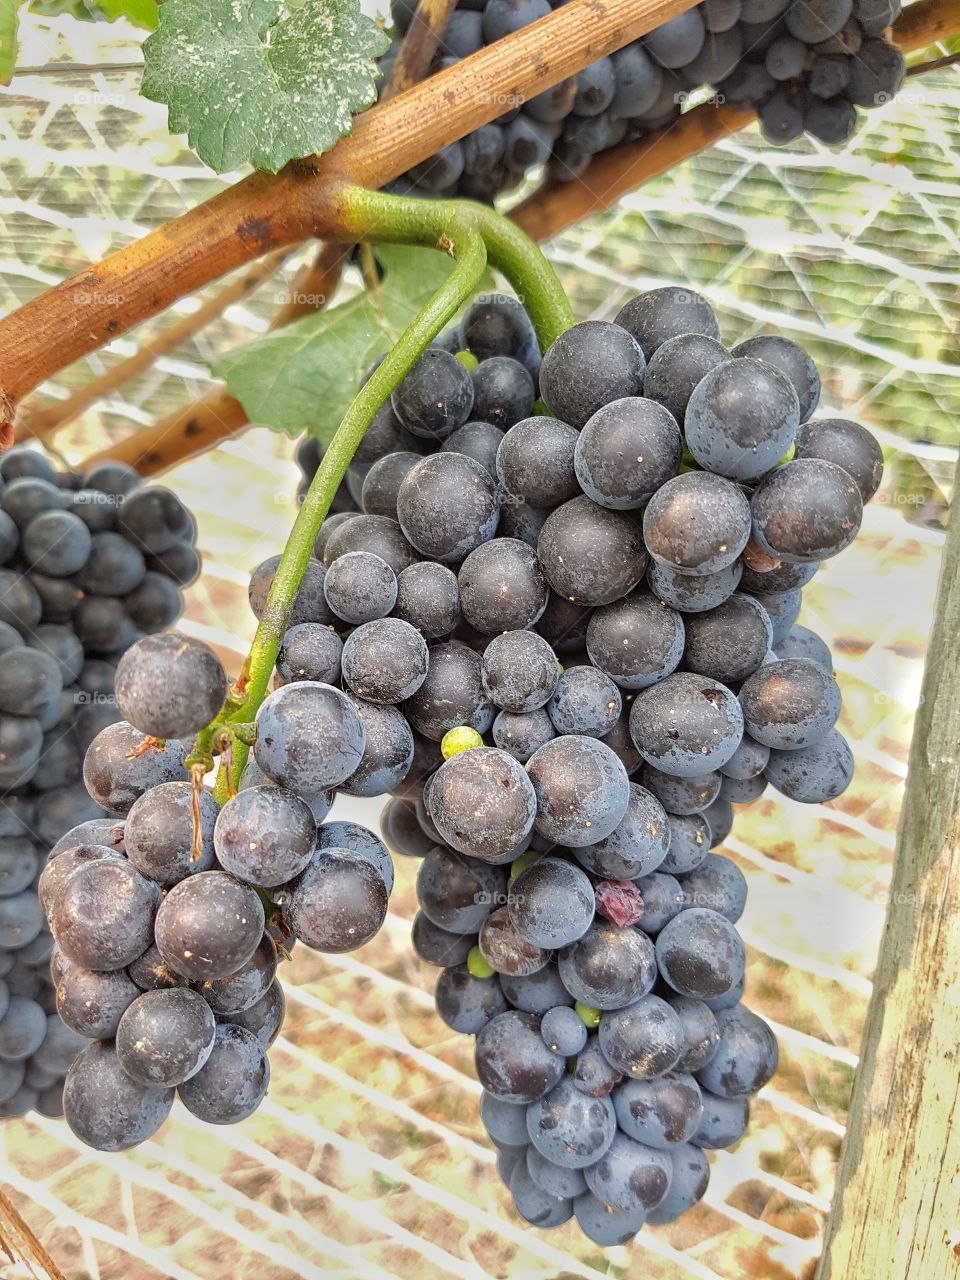 Grapes on vine